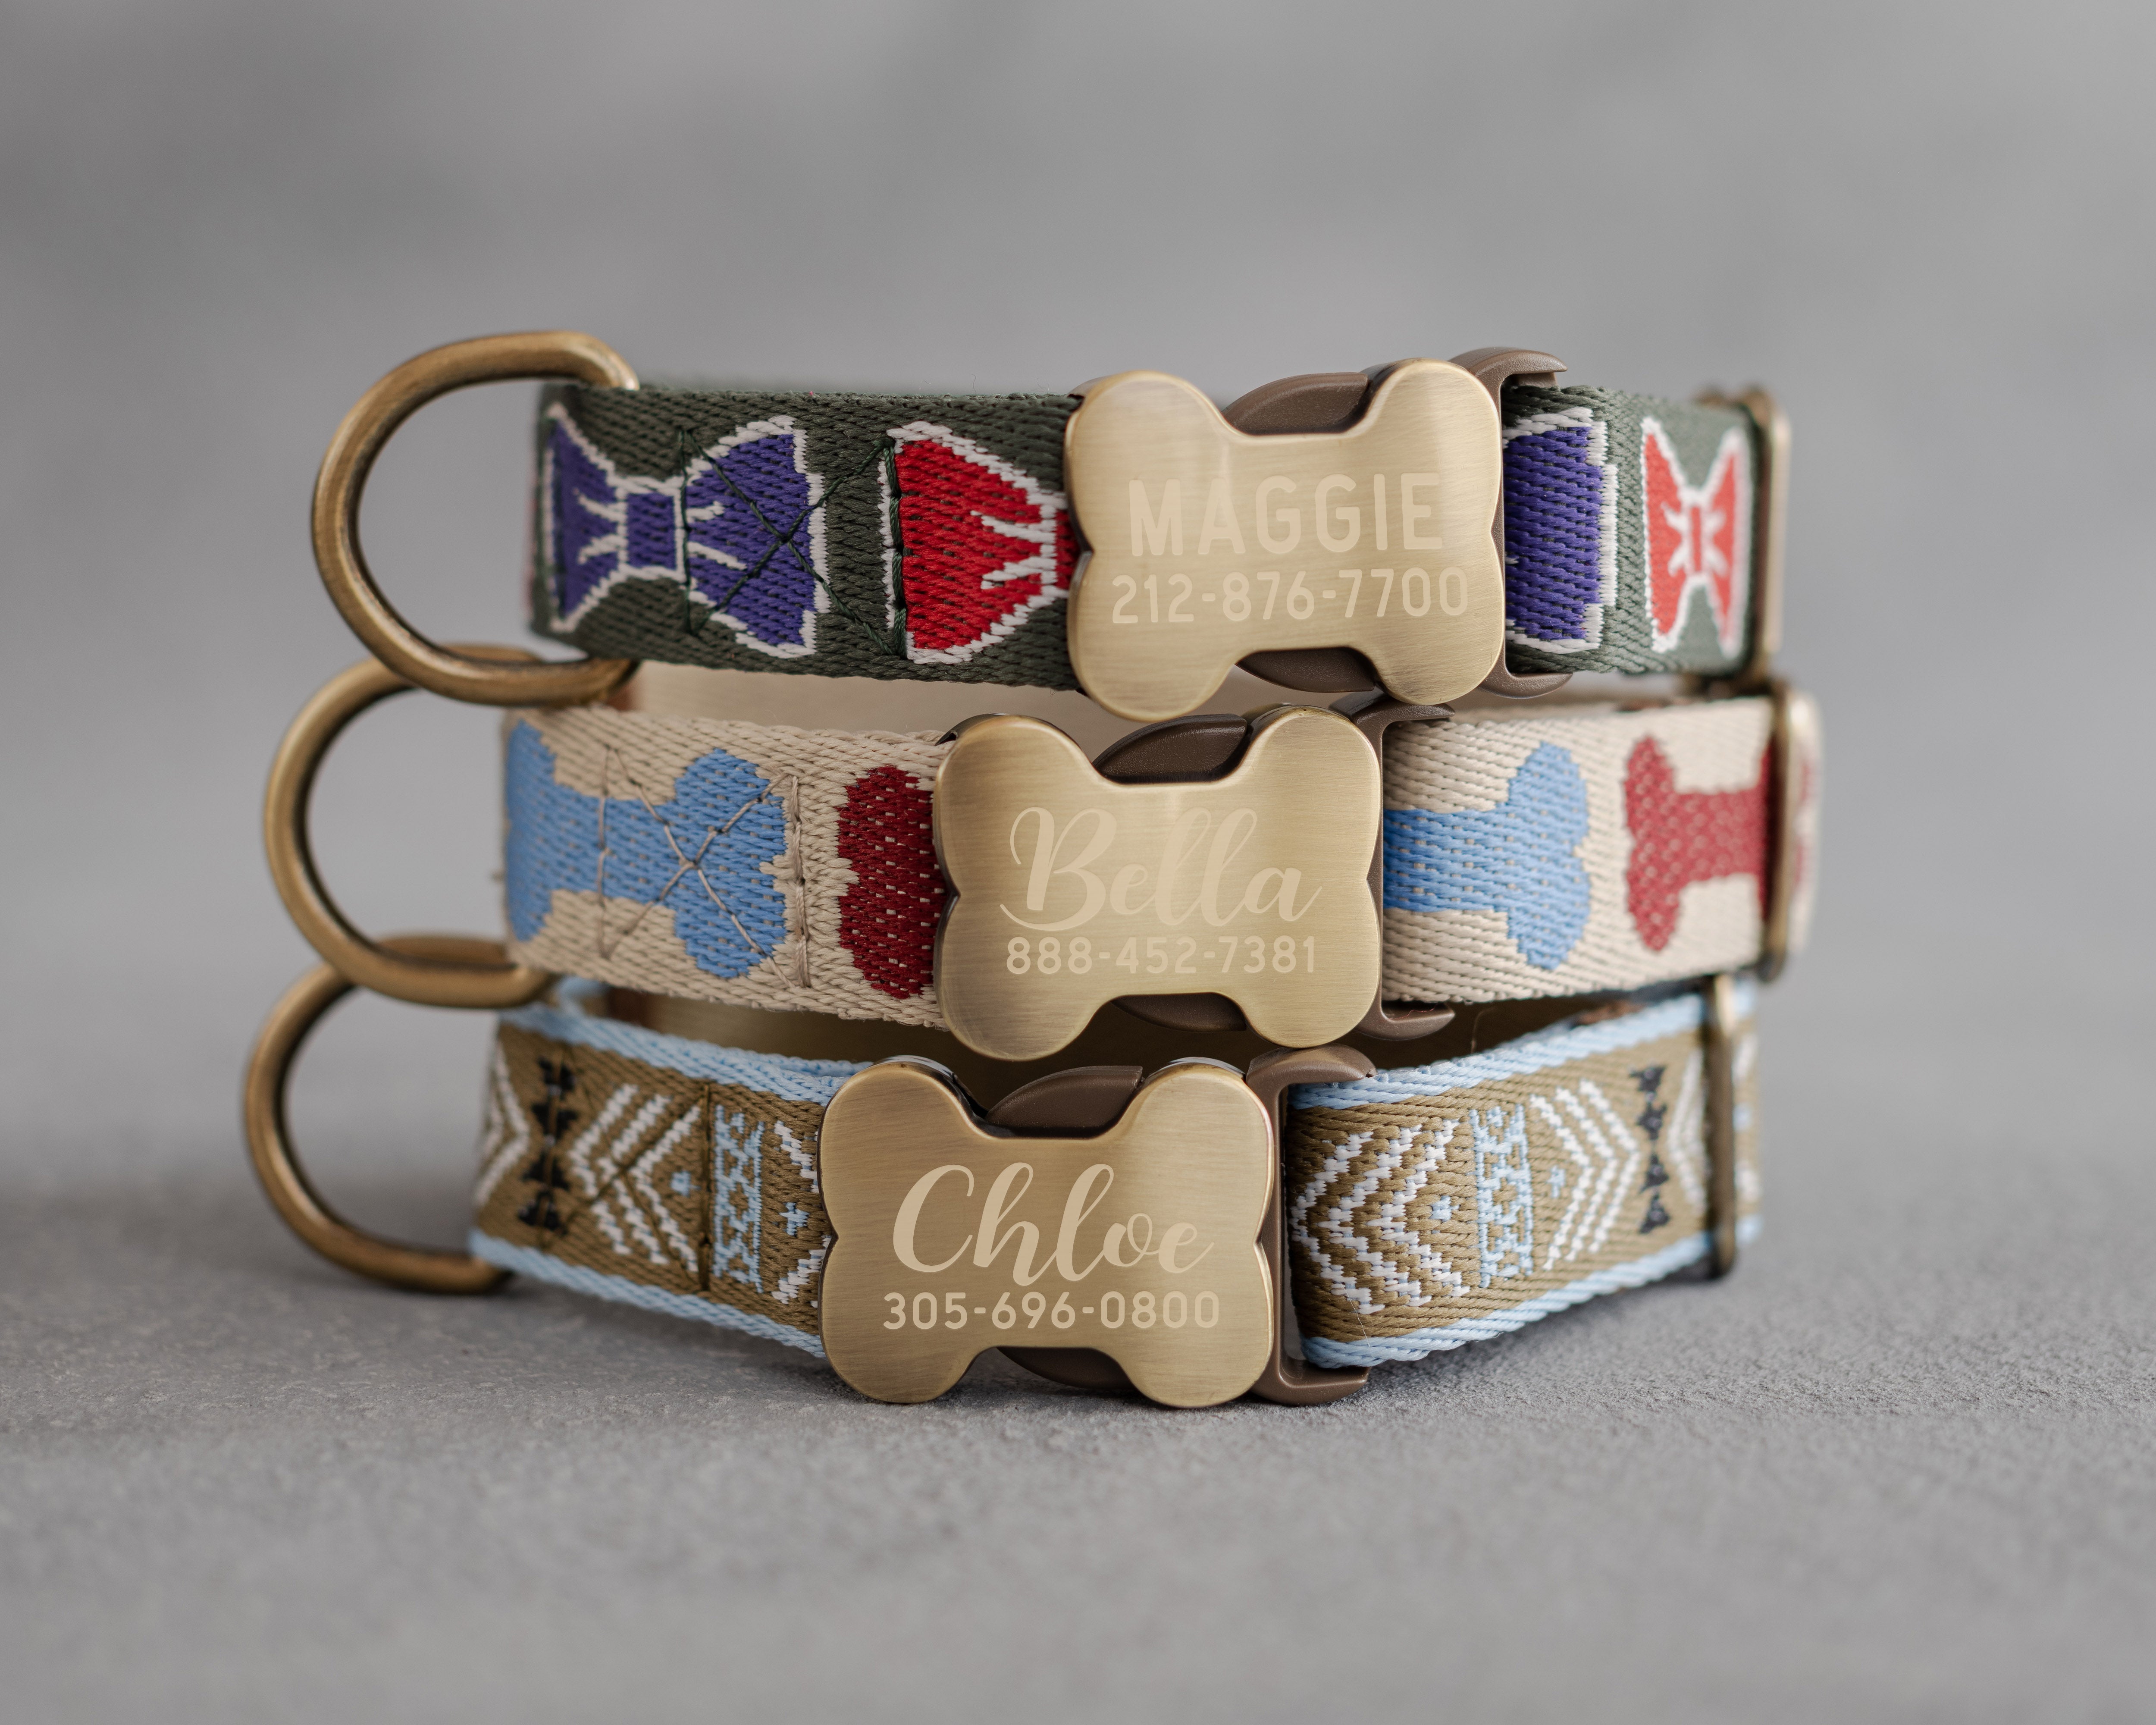 Webbing dog collar personalized